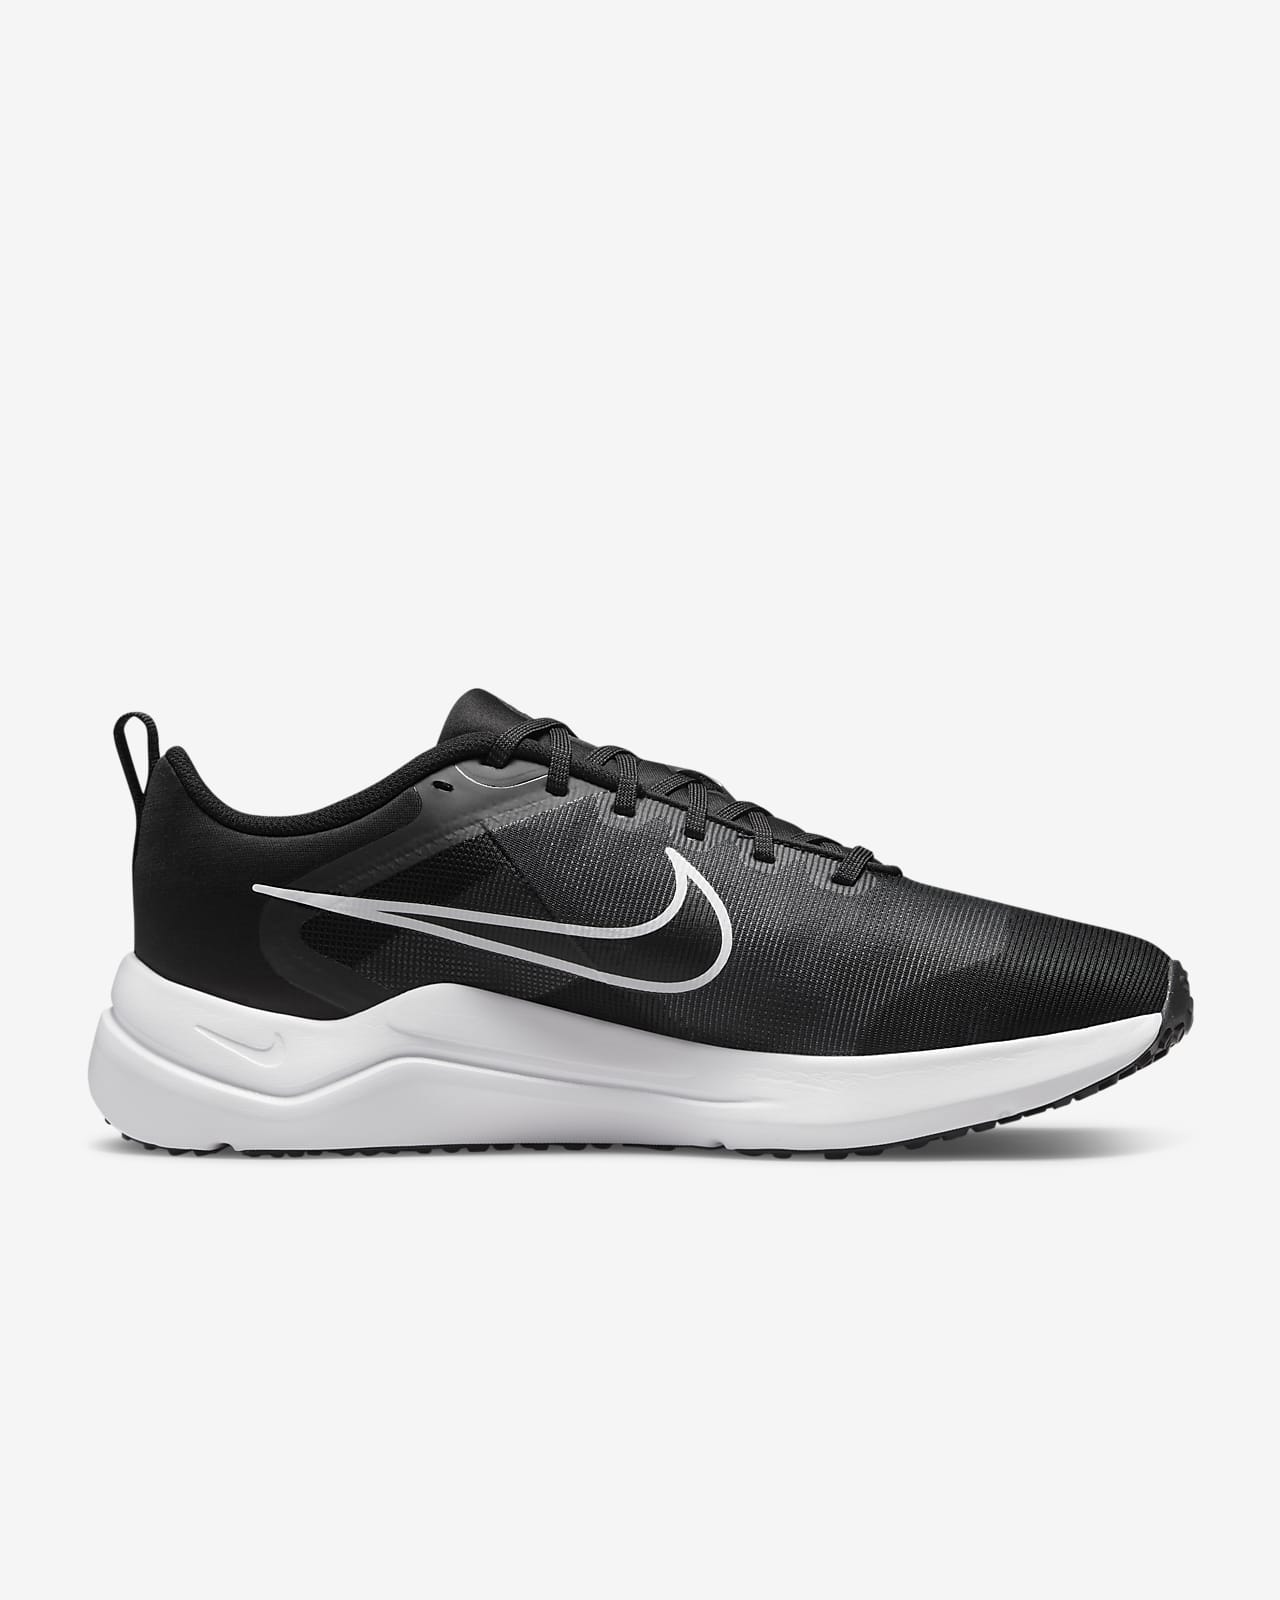 Nike 12 Road Running Shoes (Extra Nike.com